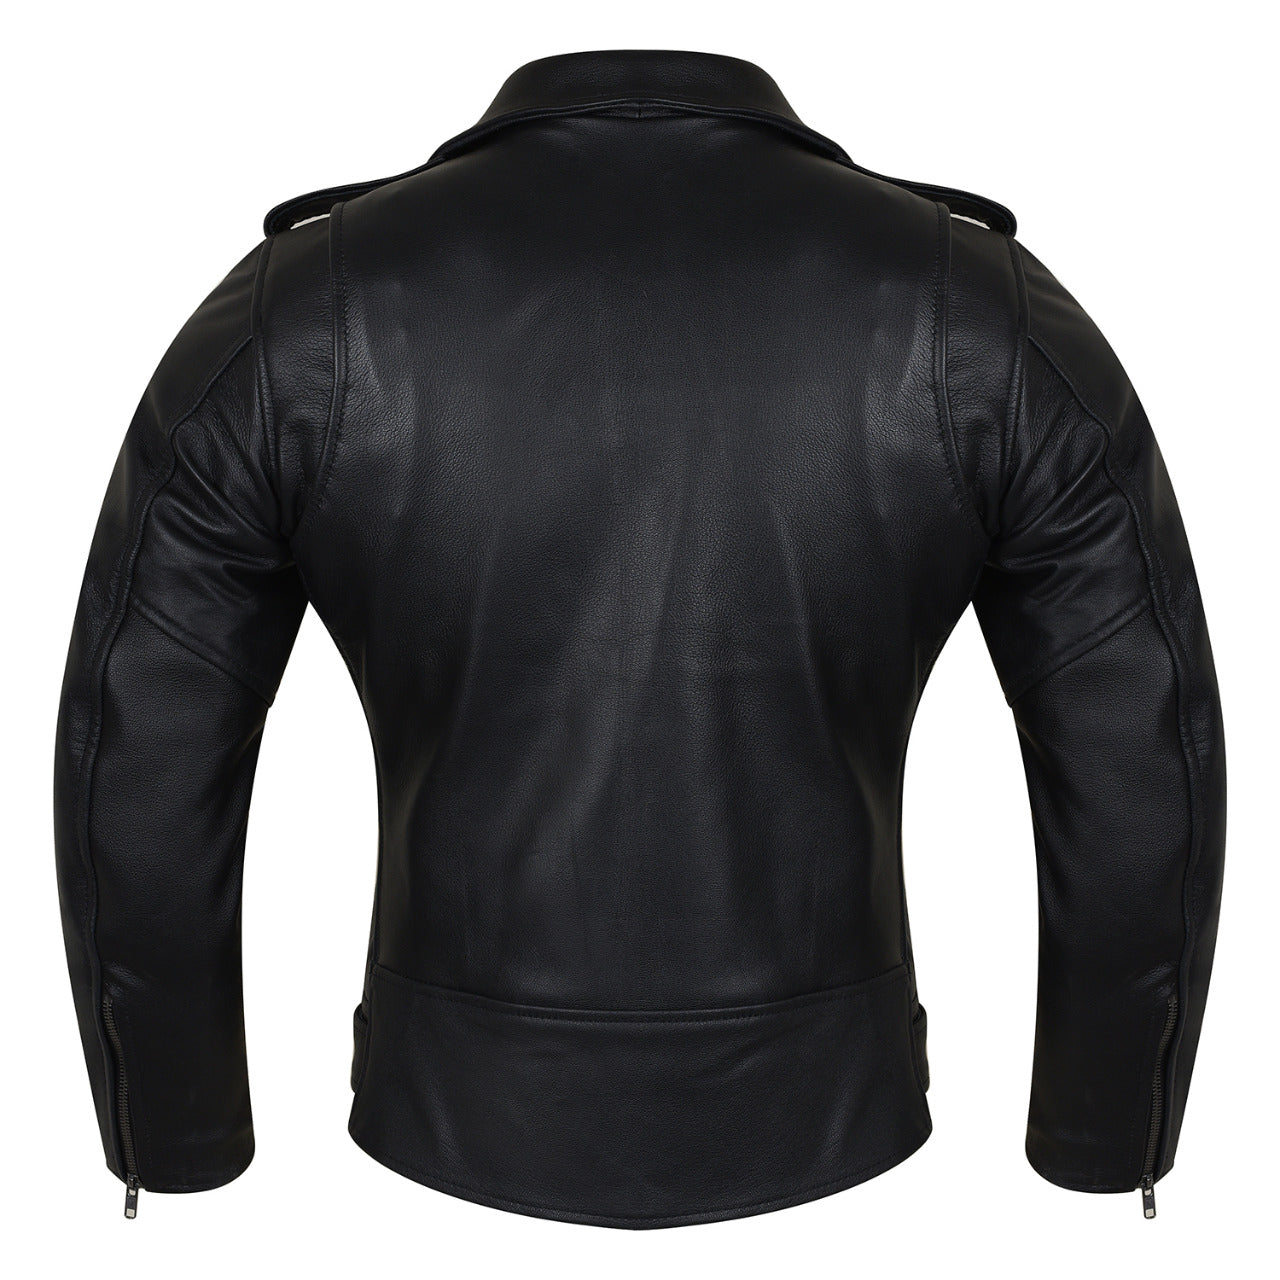 Vance Leather VL616 Ladies Premium Goatskin Classic Motorcycle Leather Jacket